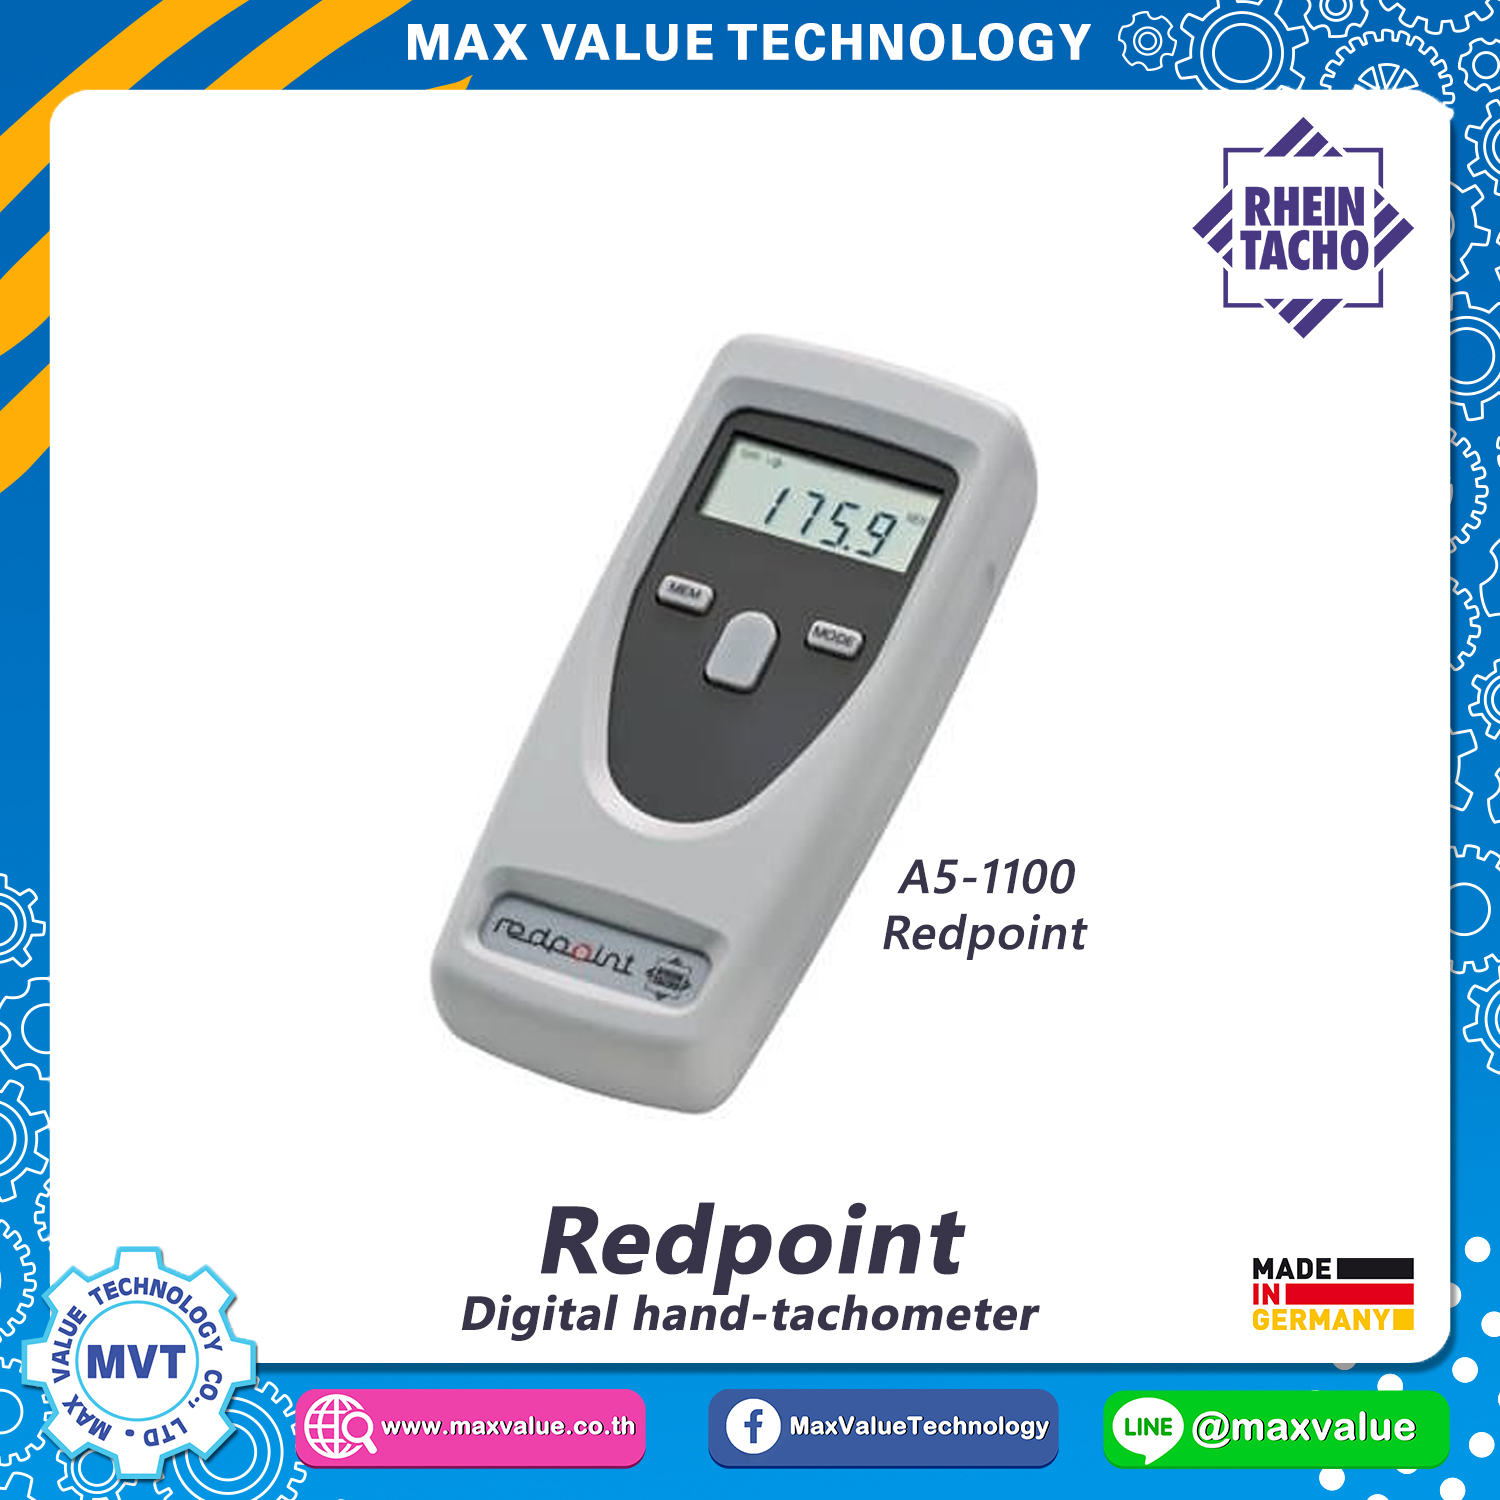 Digital hand-tachometer redpoint